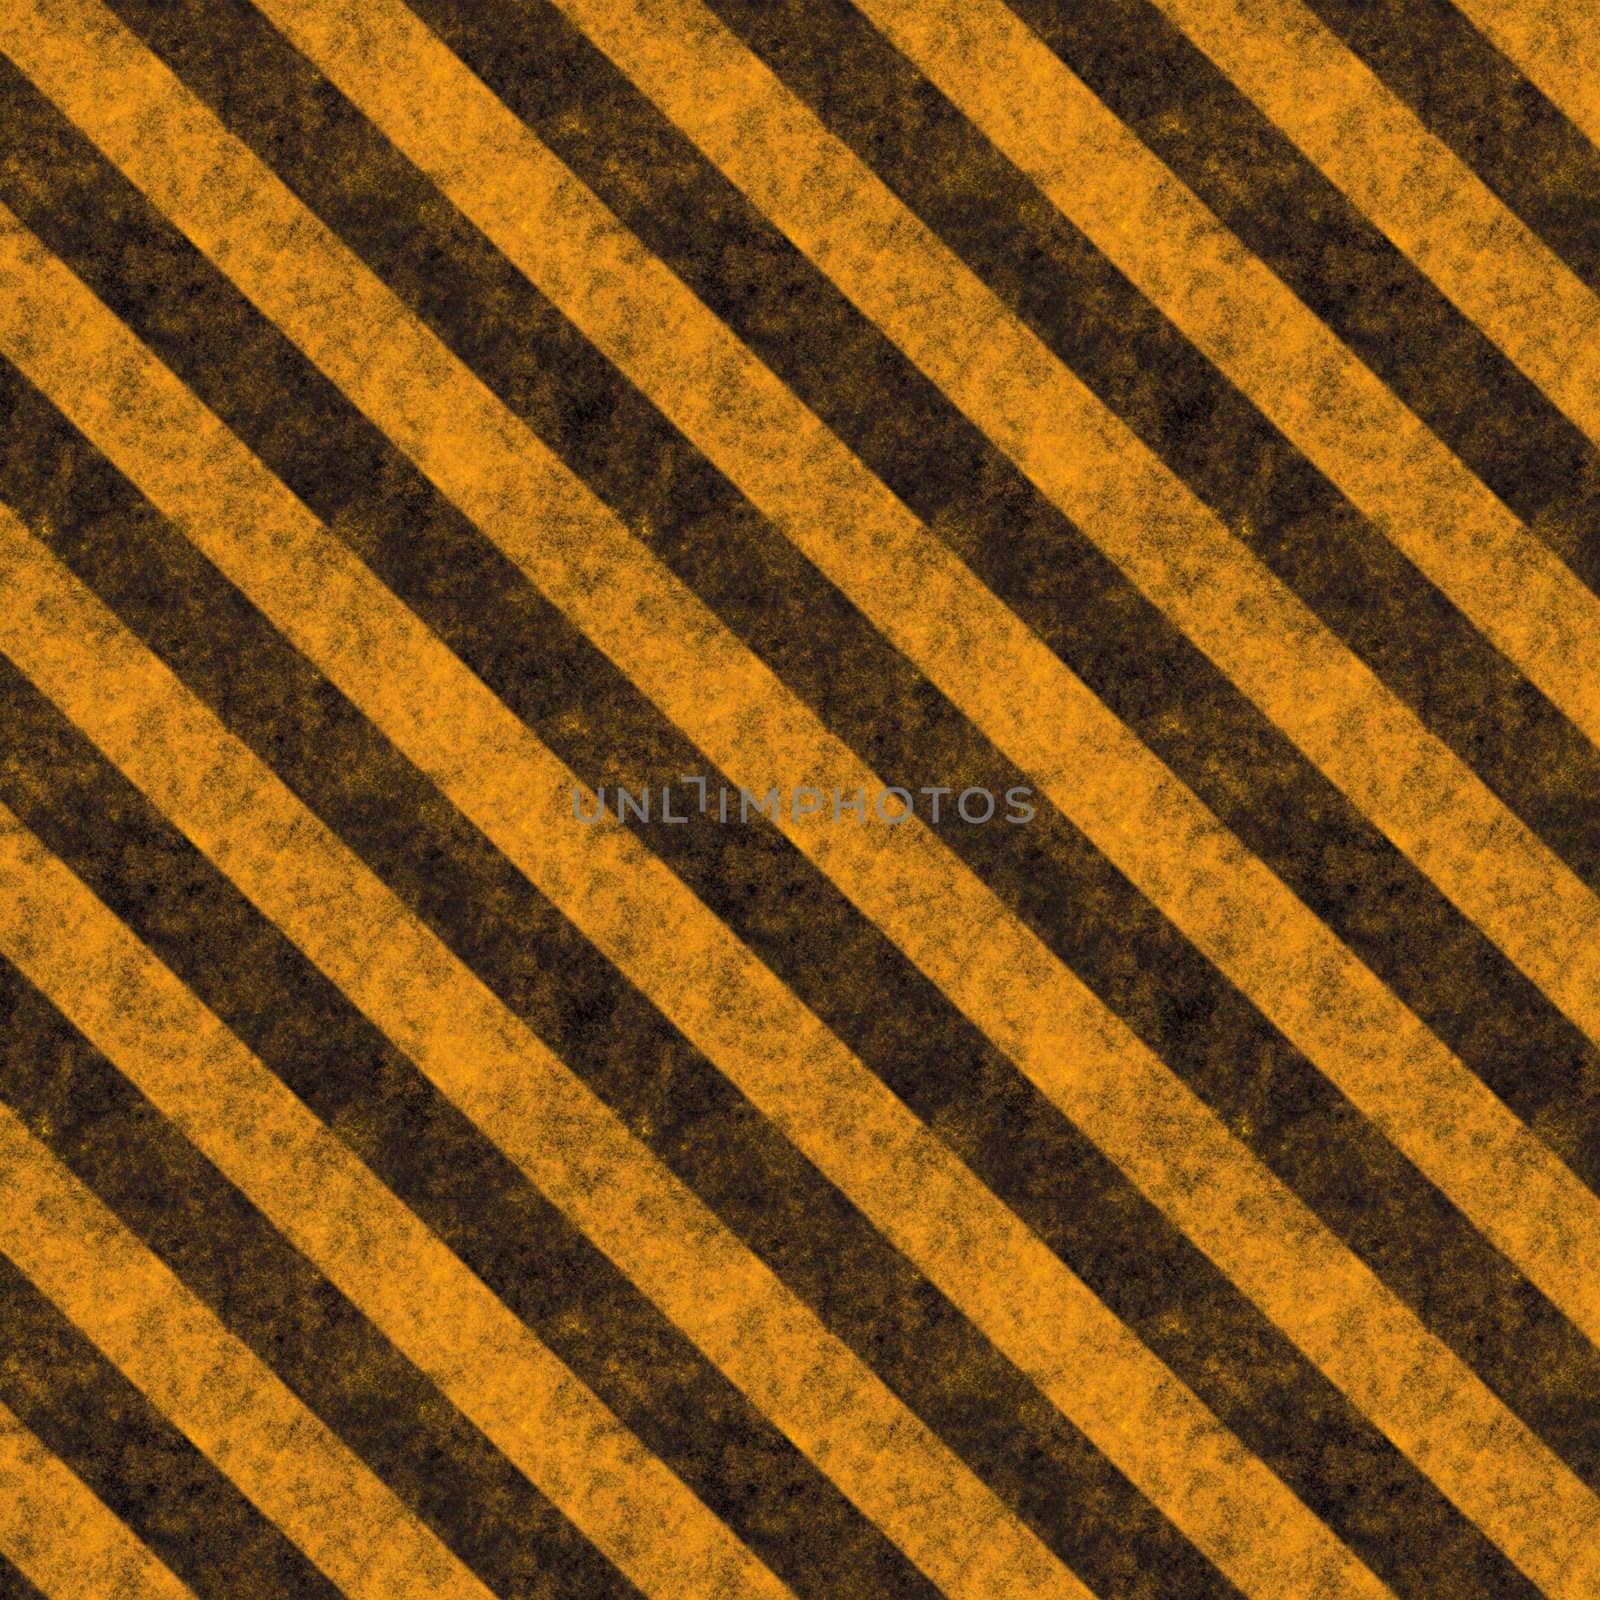 Hazard Stripes  by graficallyminded